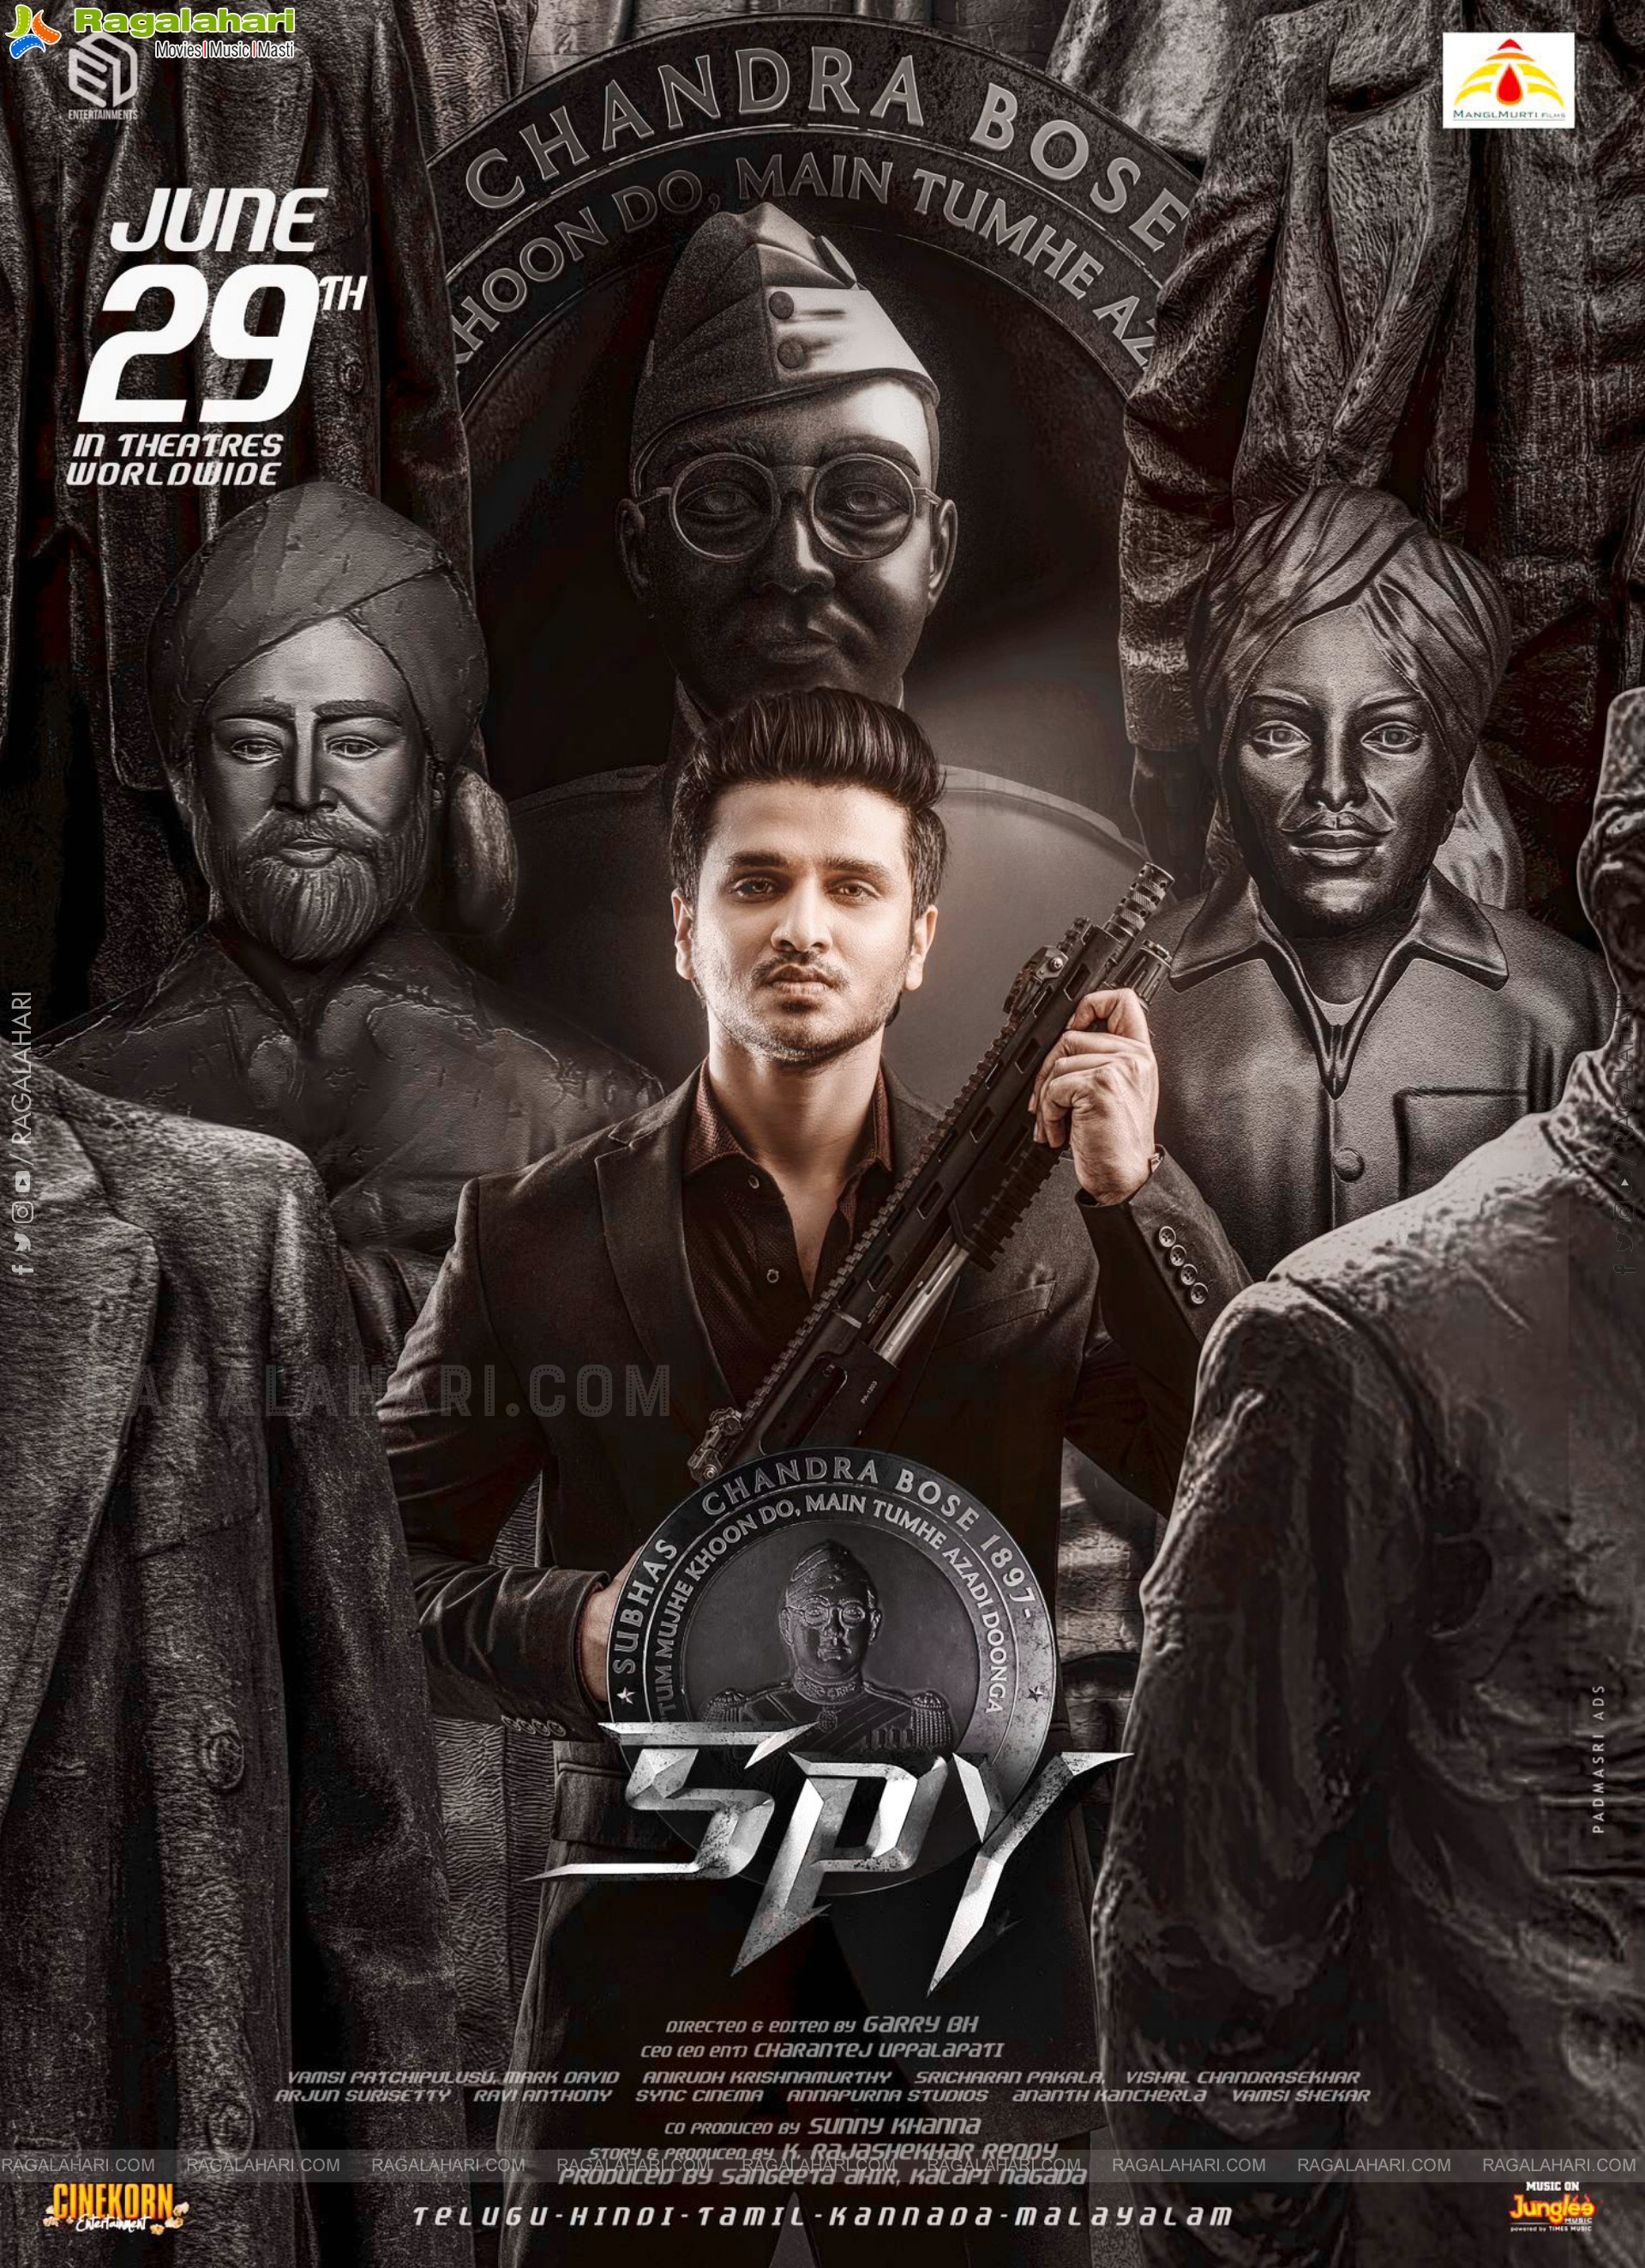 Spy Movie Poster Designs
